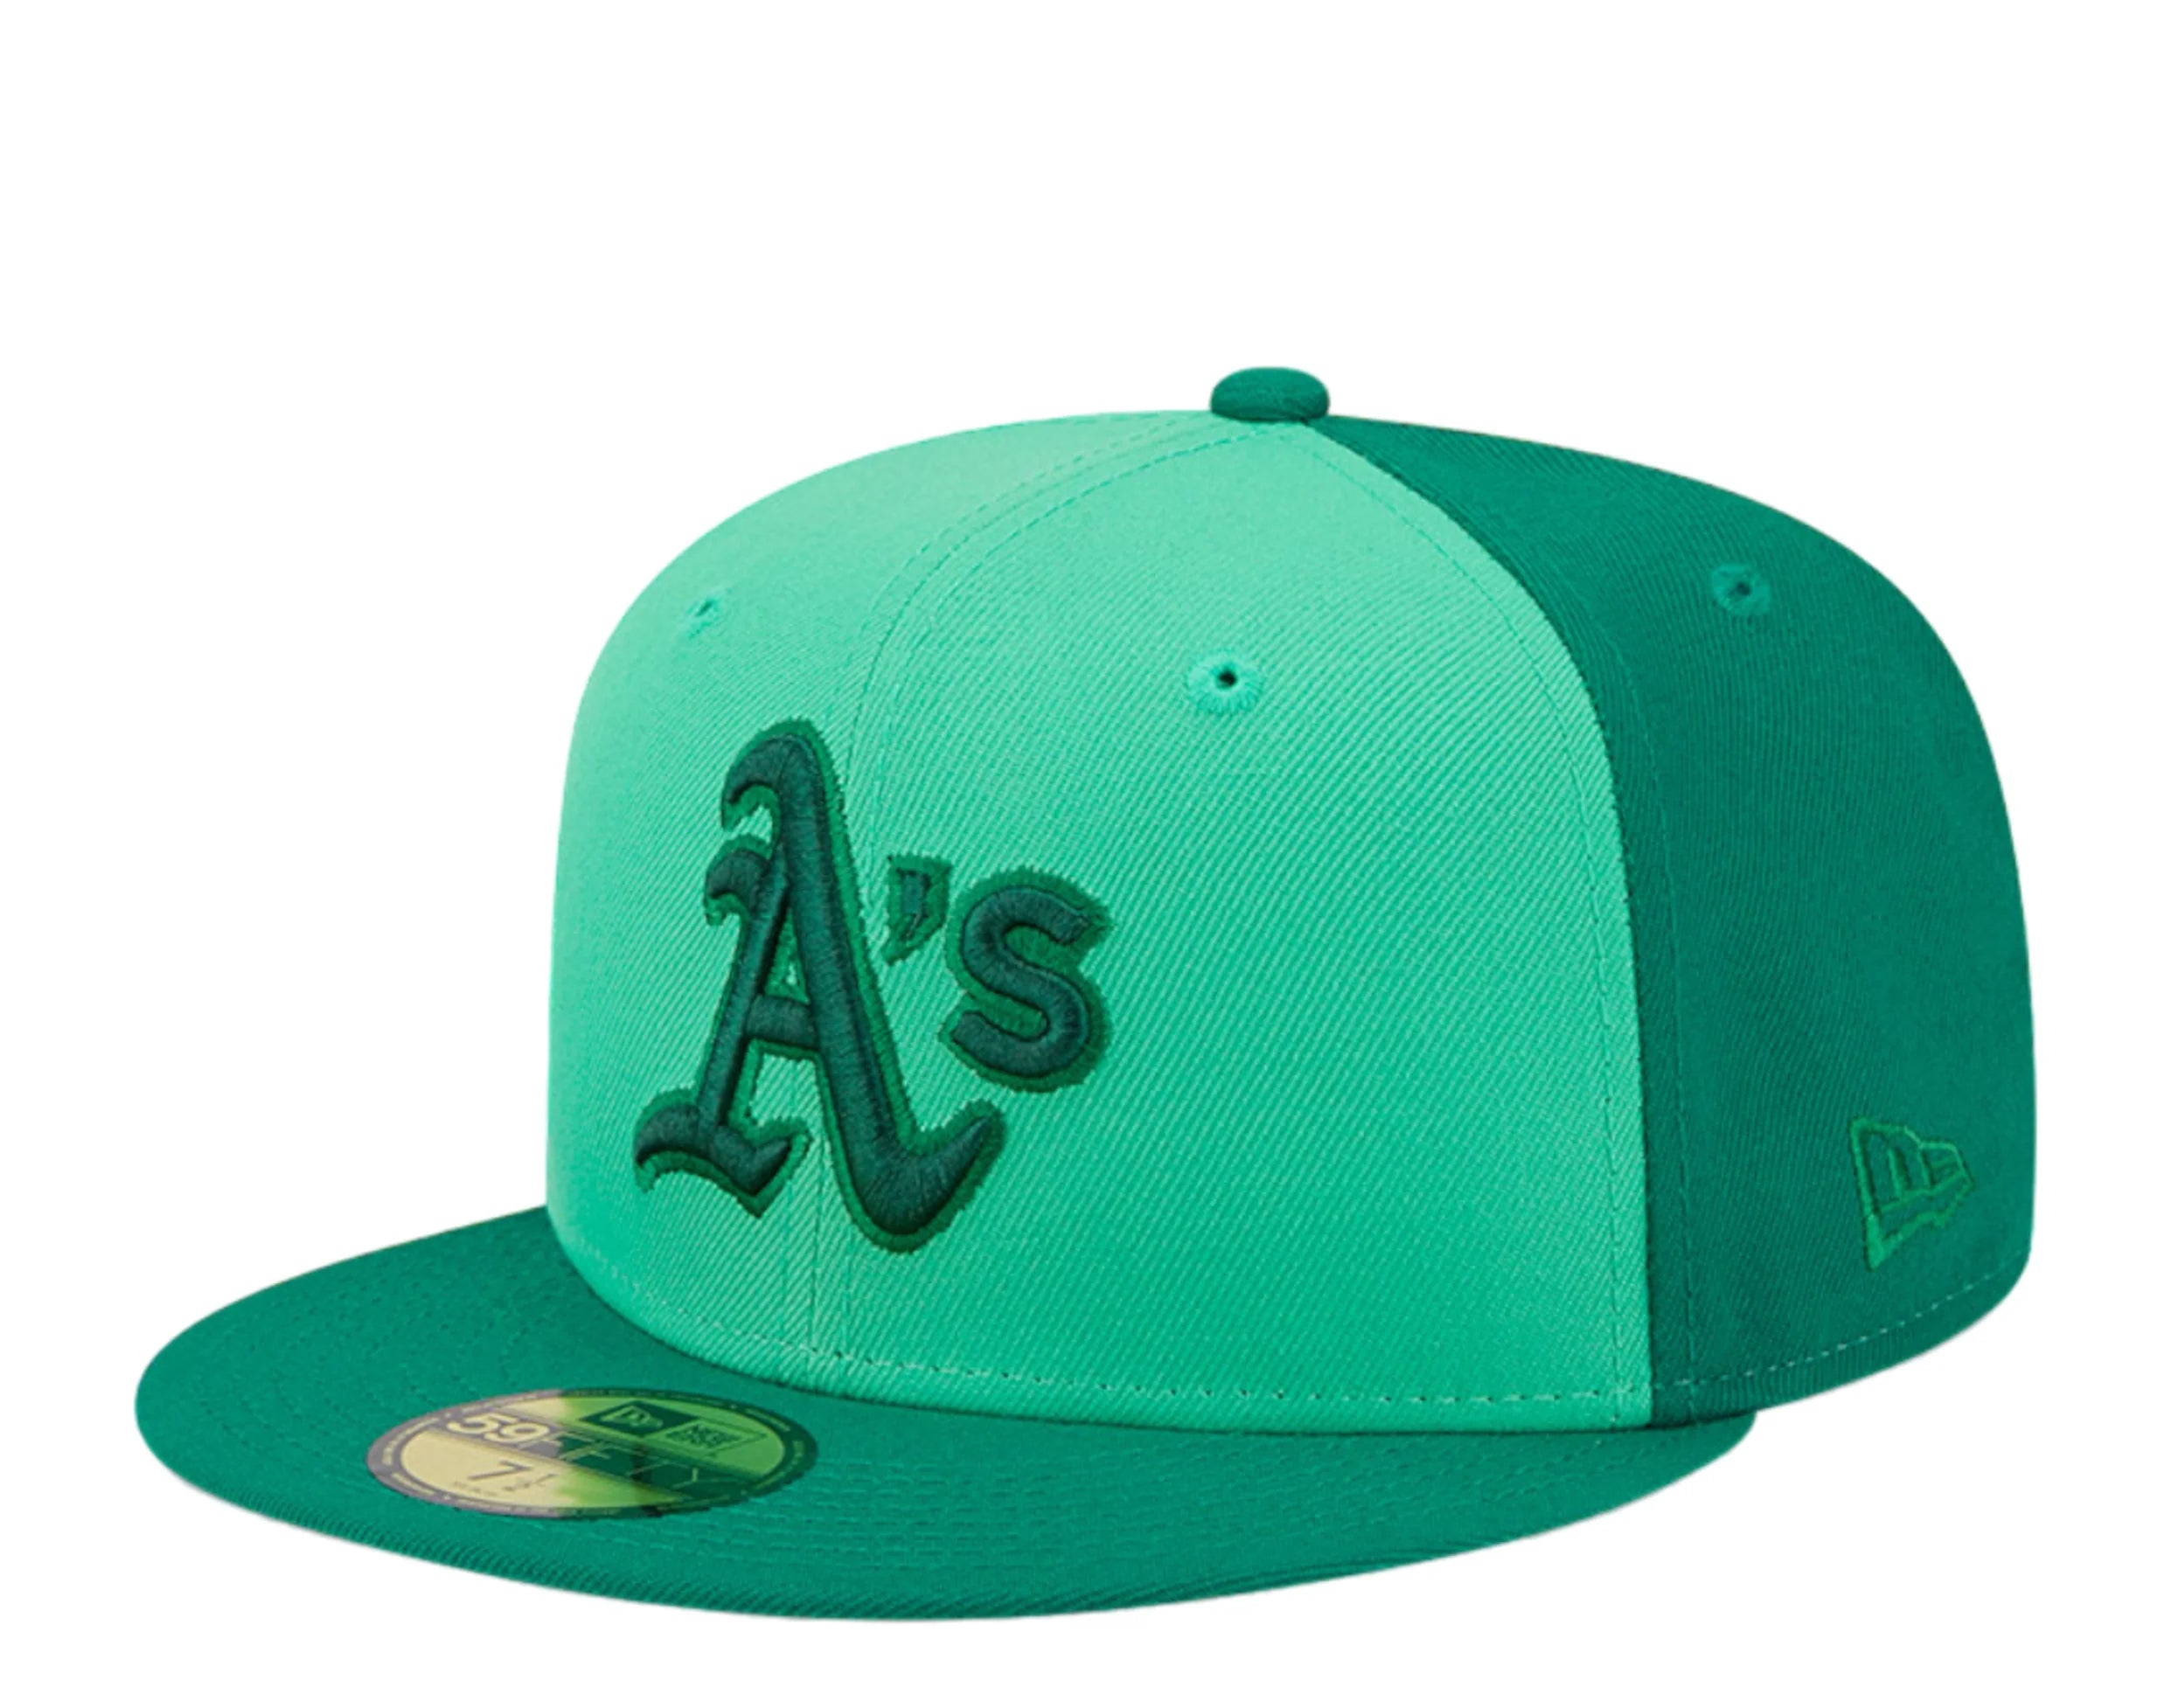 New Era 59Fifty MLB Oakland Athletics Tri-Tone Team Fitted Hat